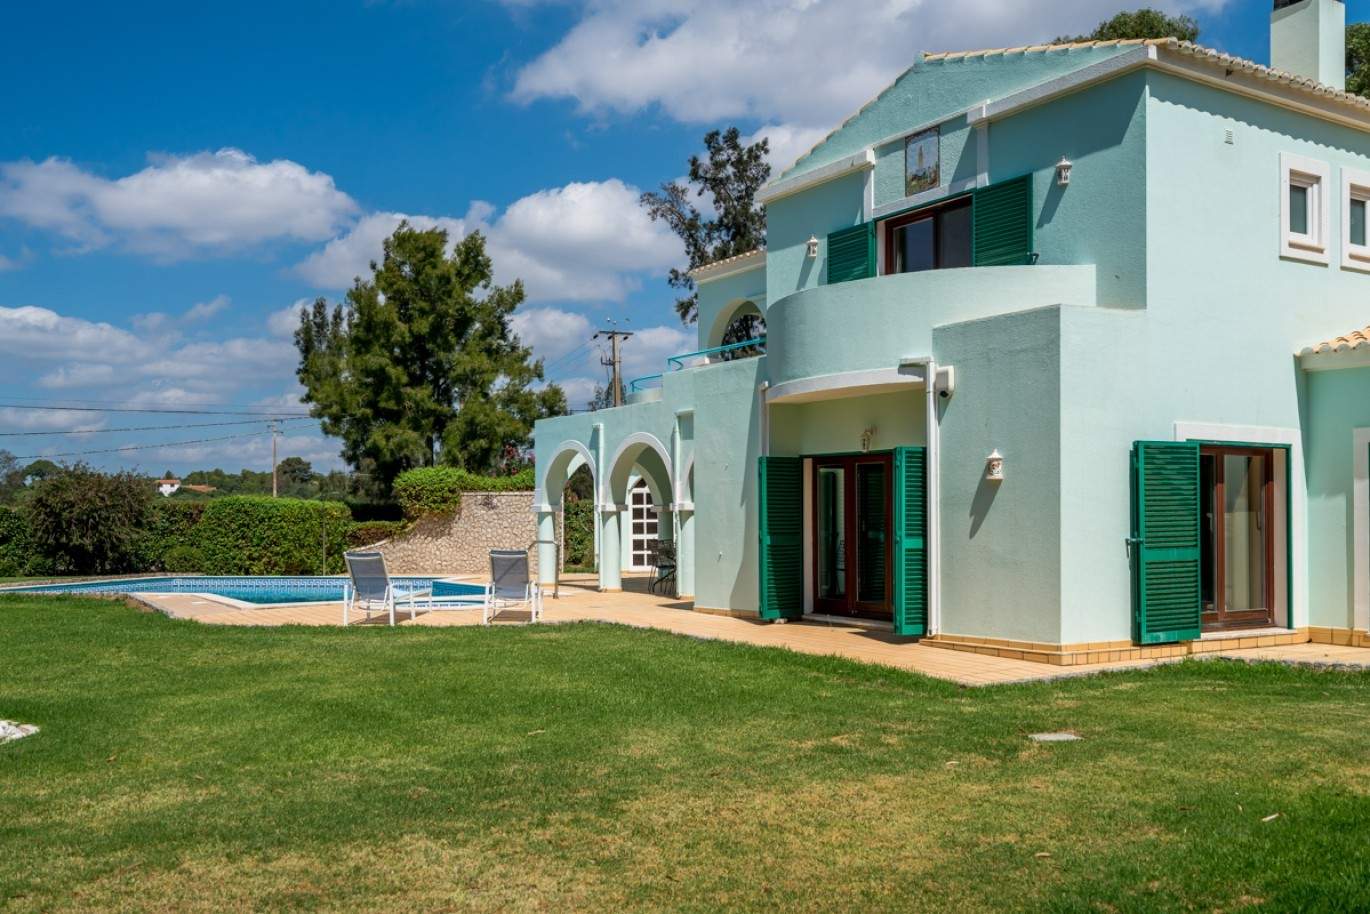 Sale of villa with garden and pool in Penina, Alvor, Algarve, Portugal_83418